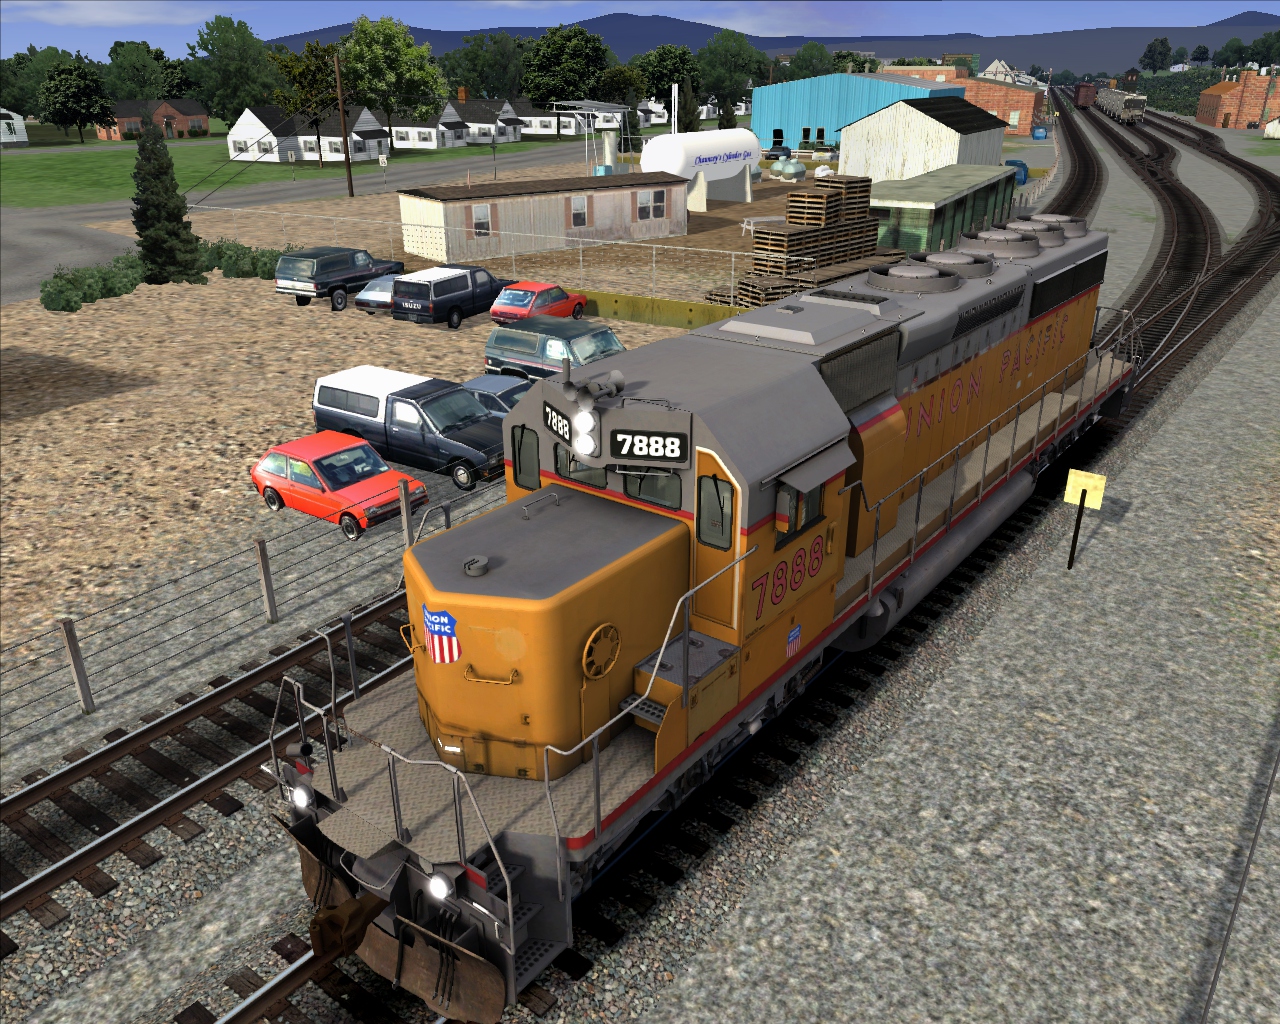 Train game simulator. Симулятор поезда Train Simulator. Railworks 3 - Train Simulator 2012 Deluxe. Microsoft Train Simulator 2. Railworks 3 Train Simulator 2012.